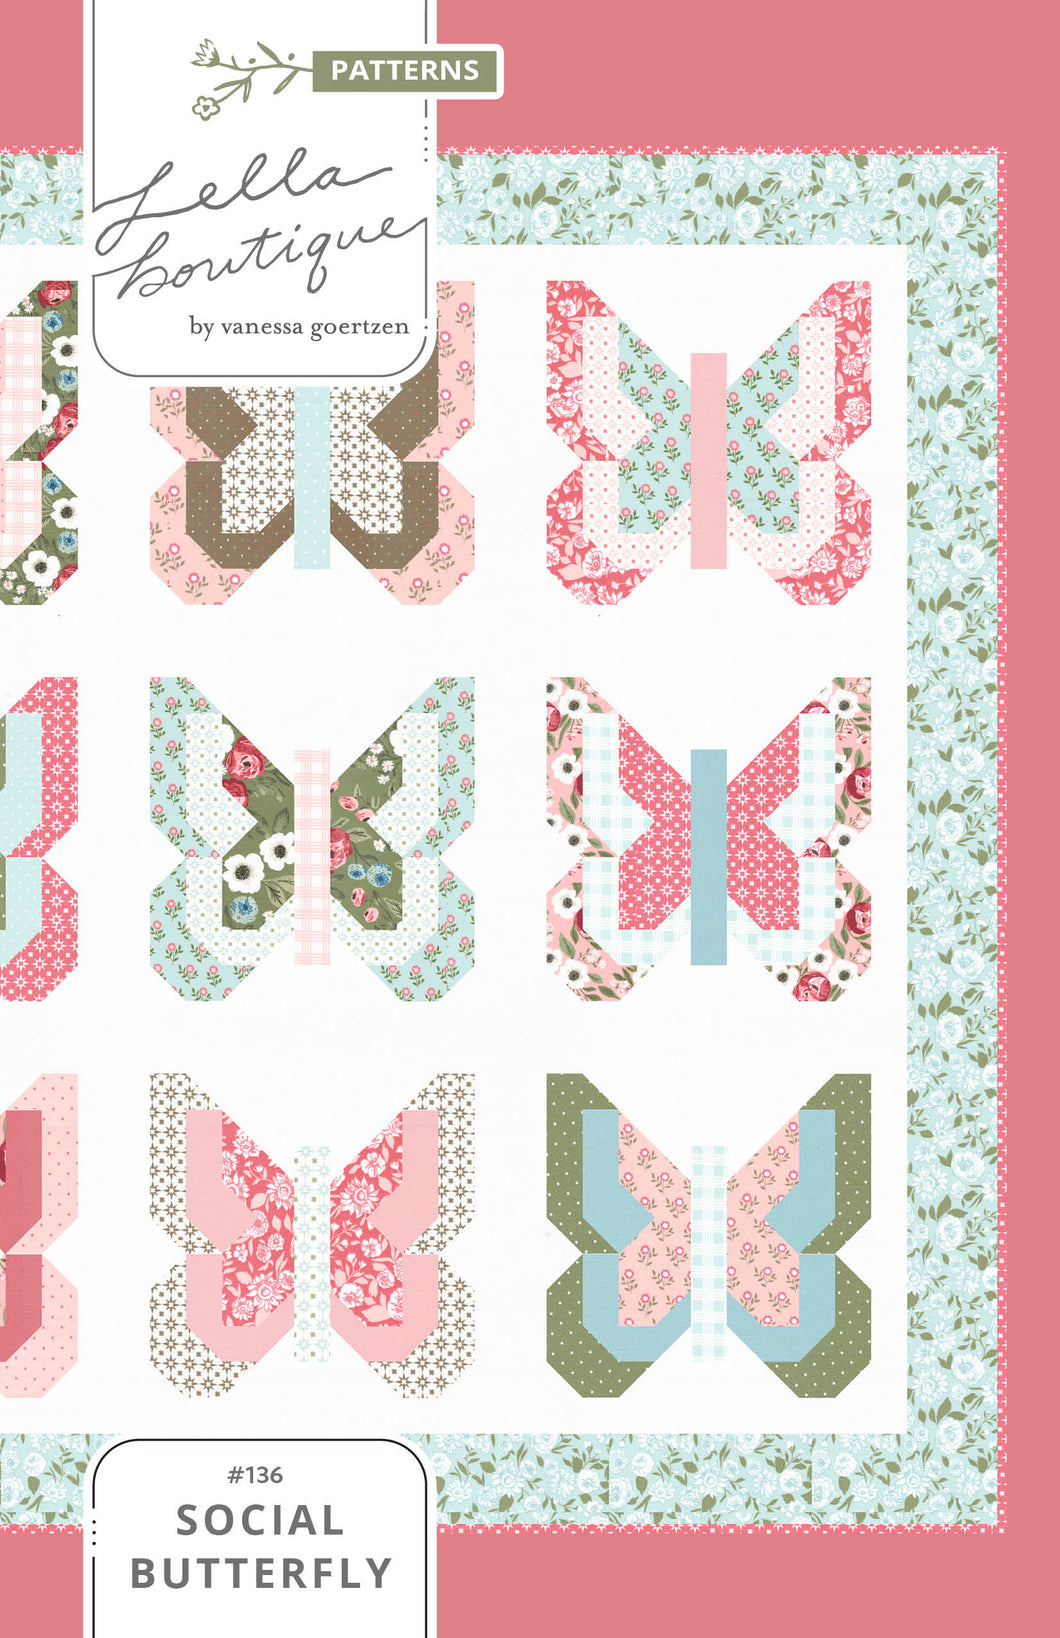 Social Butterfly fat quarter quilt by Vanessa Goertzen of Lella Boutique. Fat quarter friendly. Fabric is Lovestruck by Lella Boutique for Moda Fabrics. Download the PDF here!